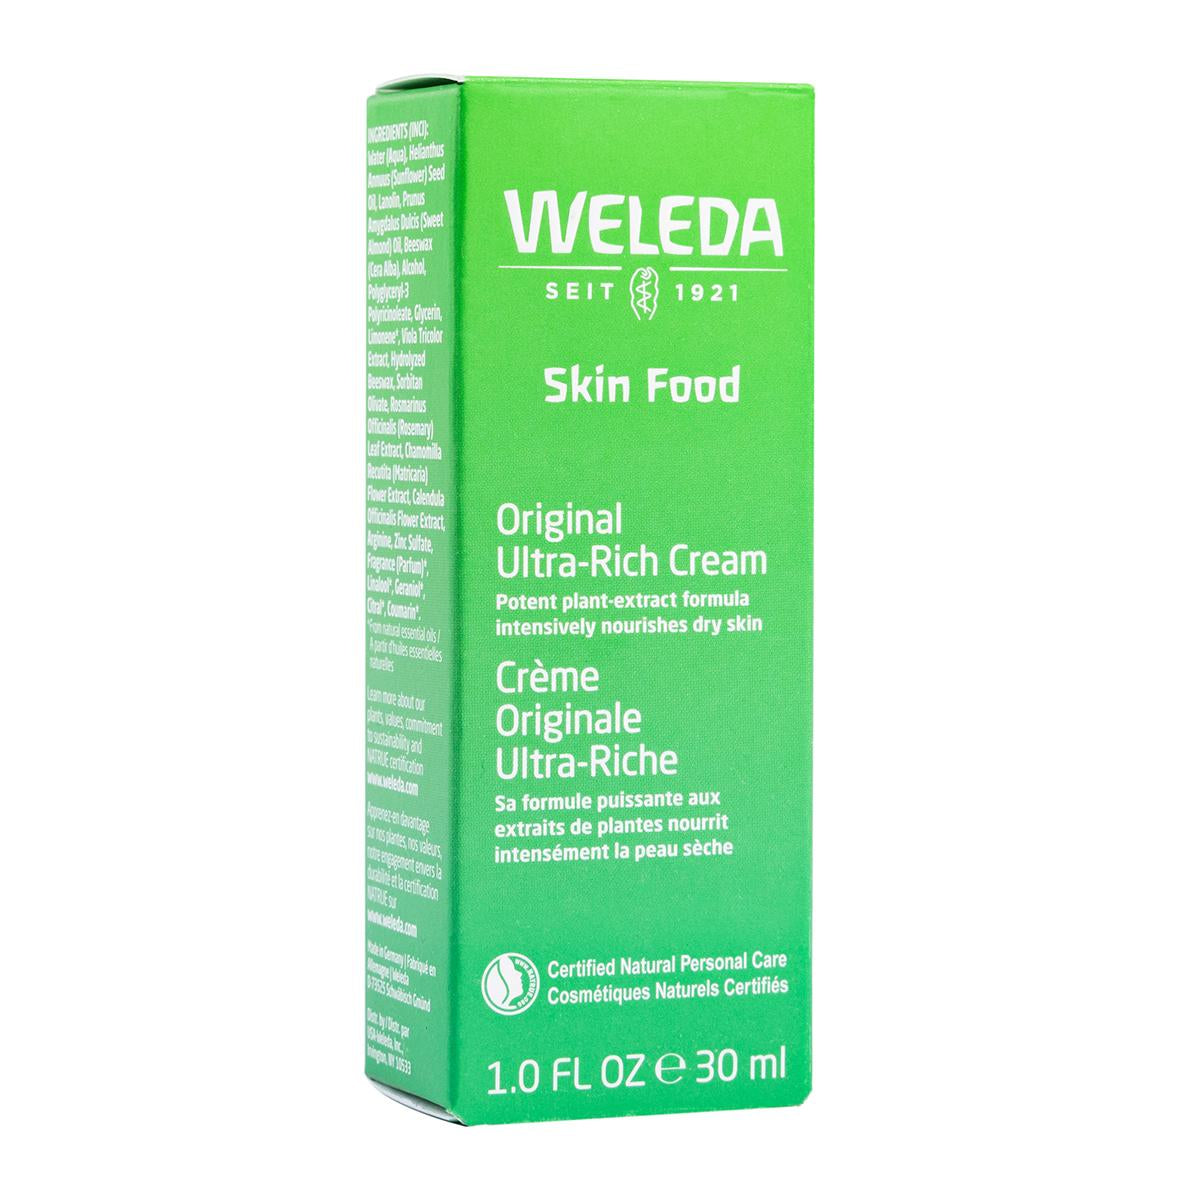 Weleda Skin Food, Original Ultra-Rich Cream, 2.5 oz 